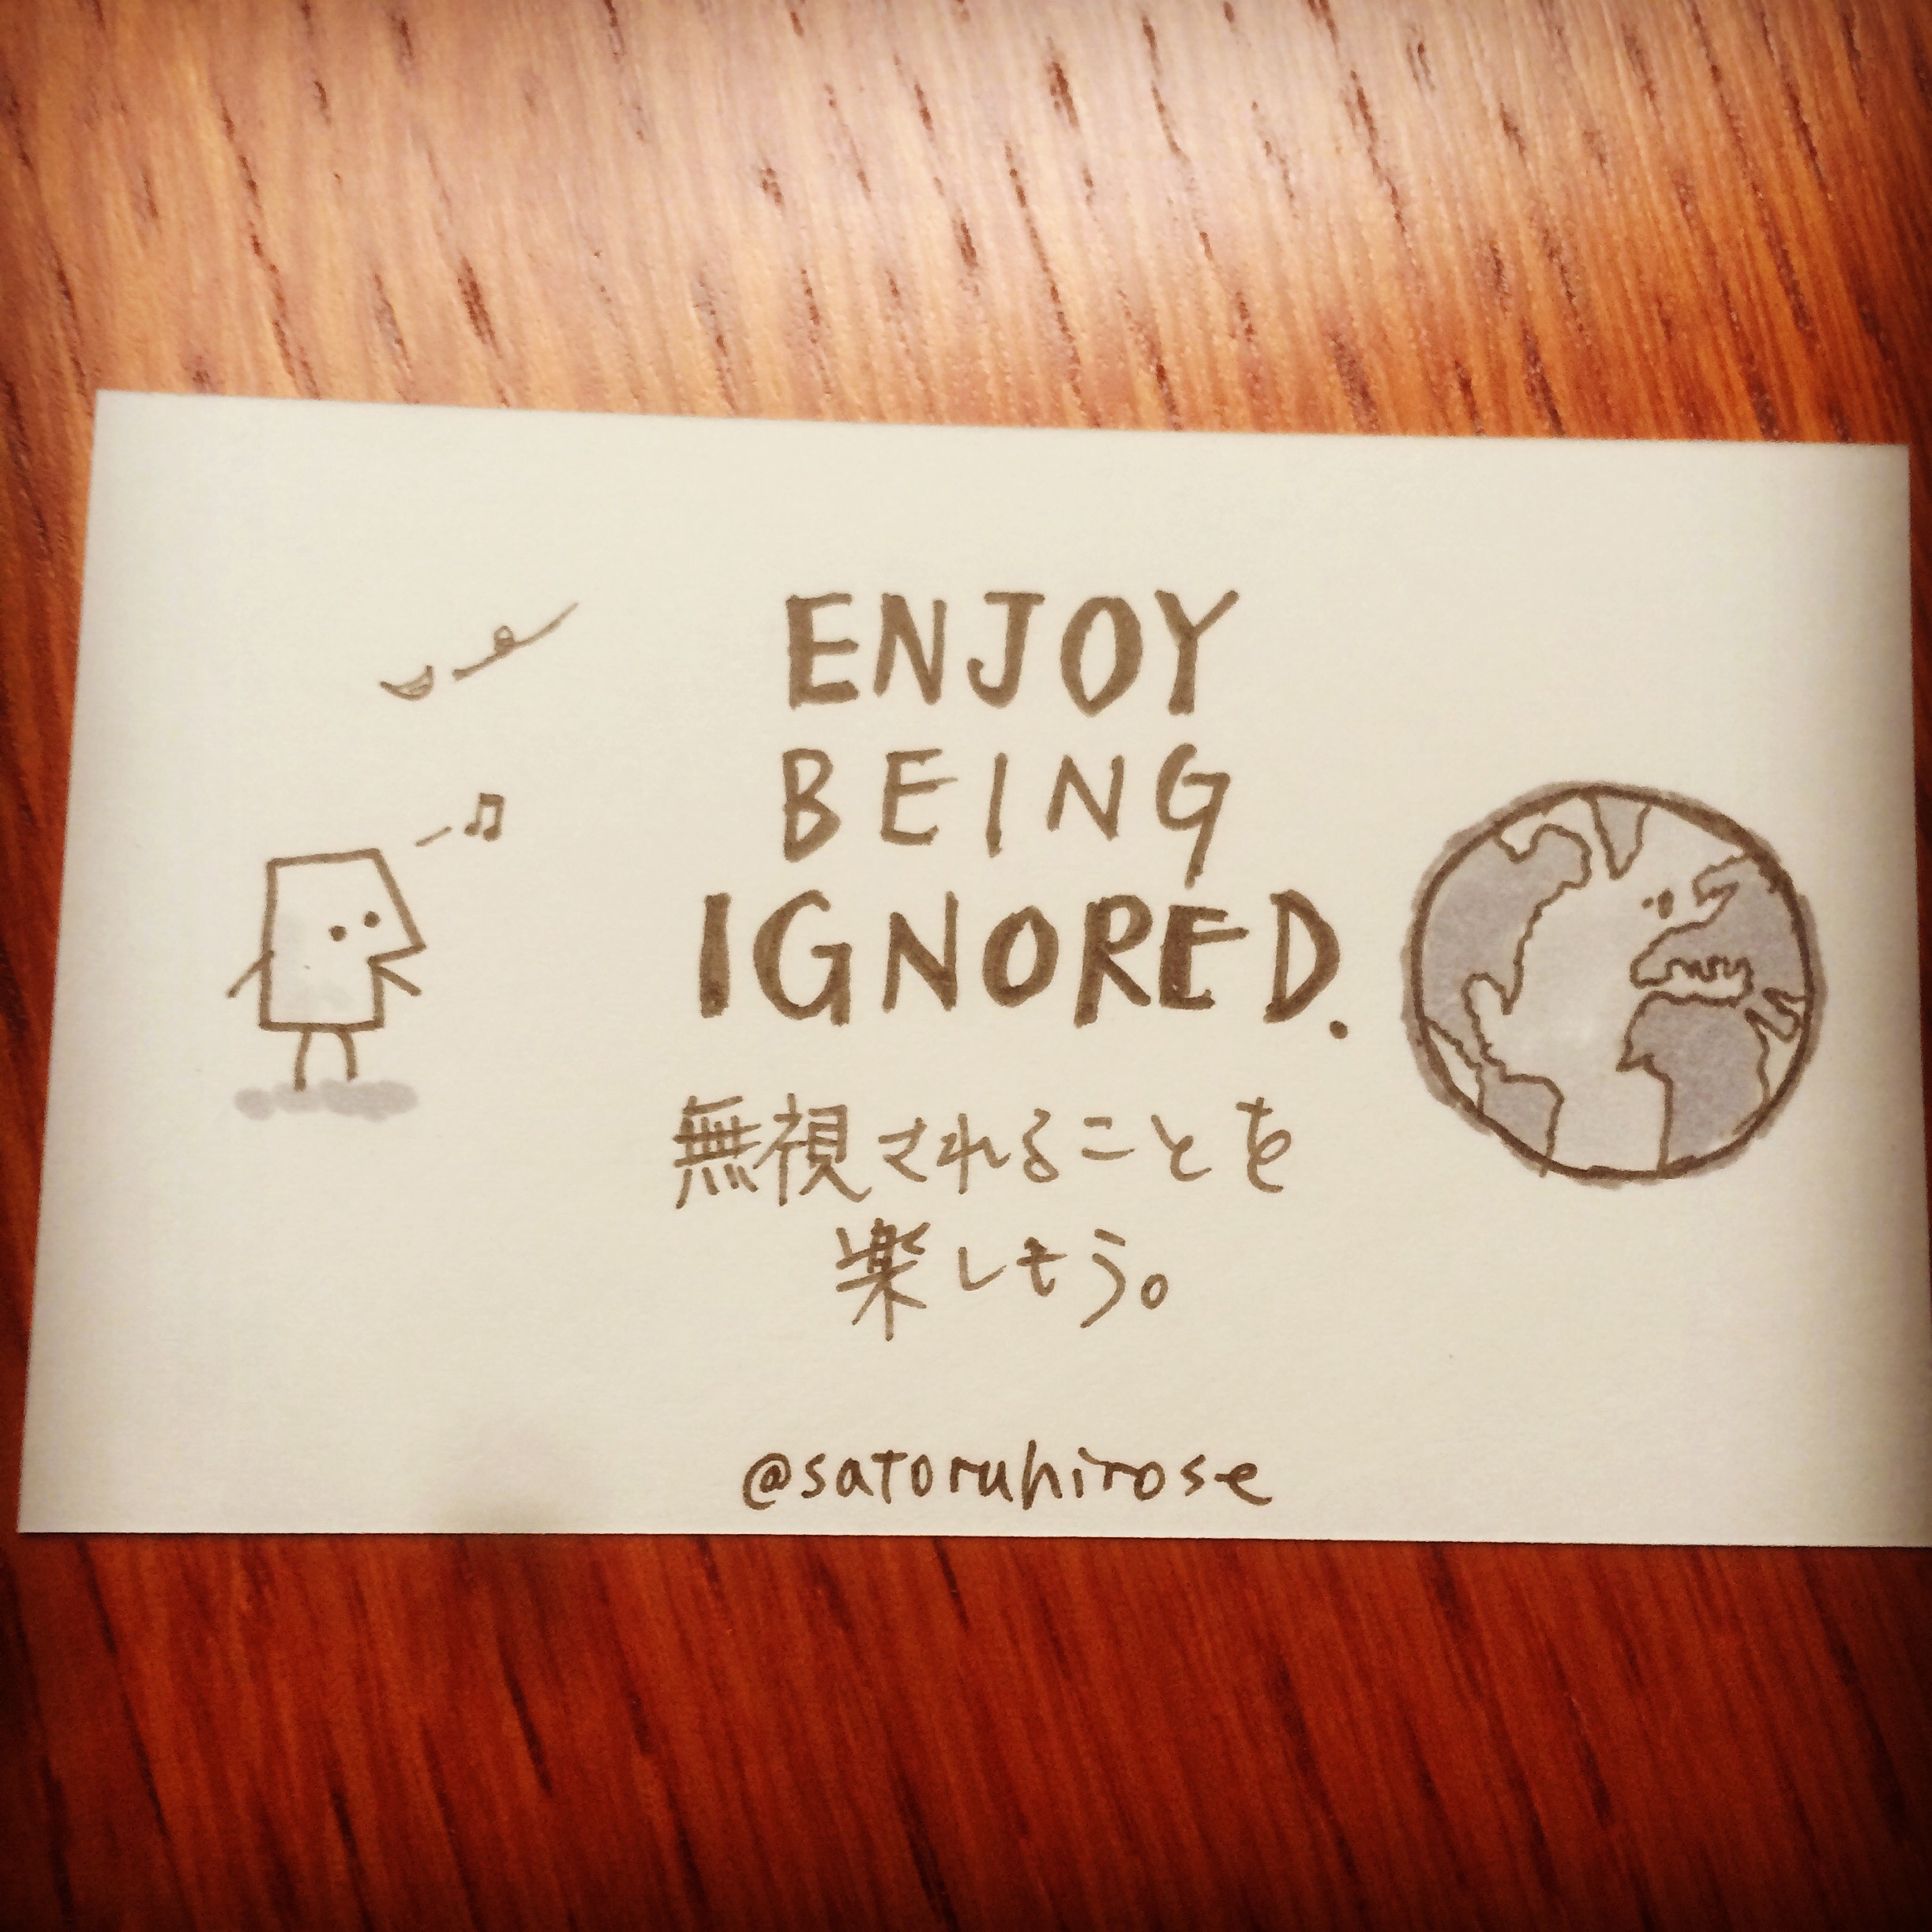 Enjoy being ignored.